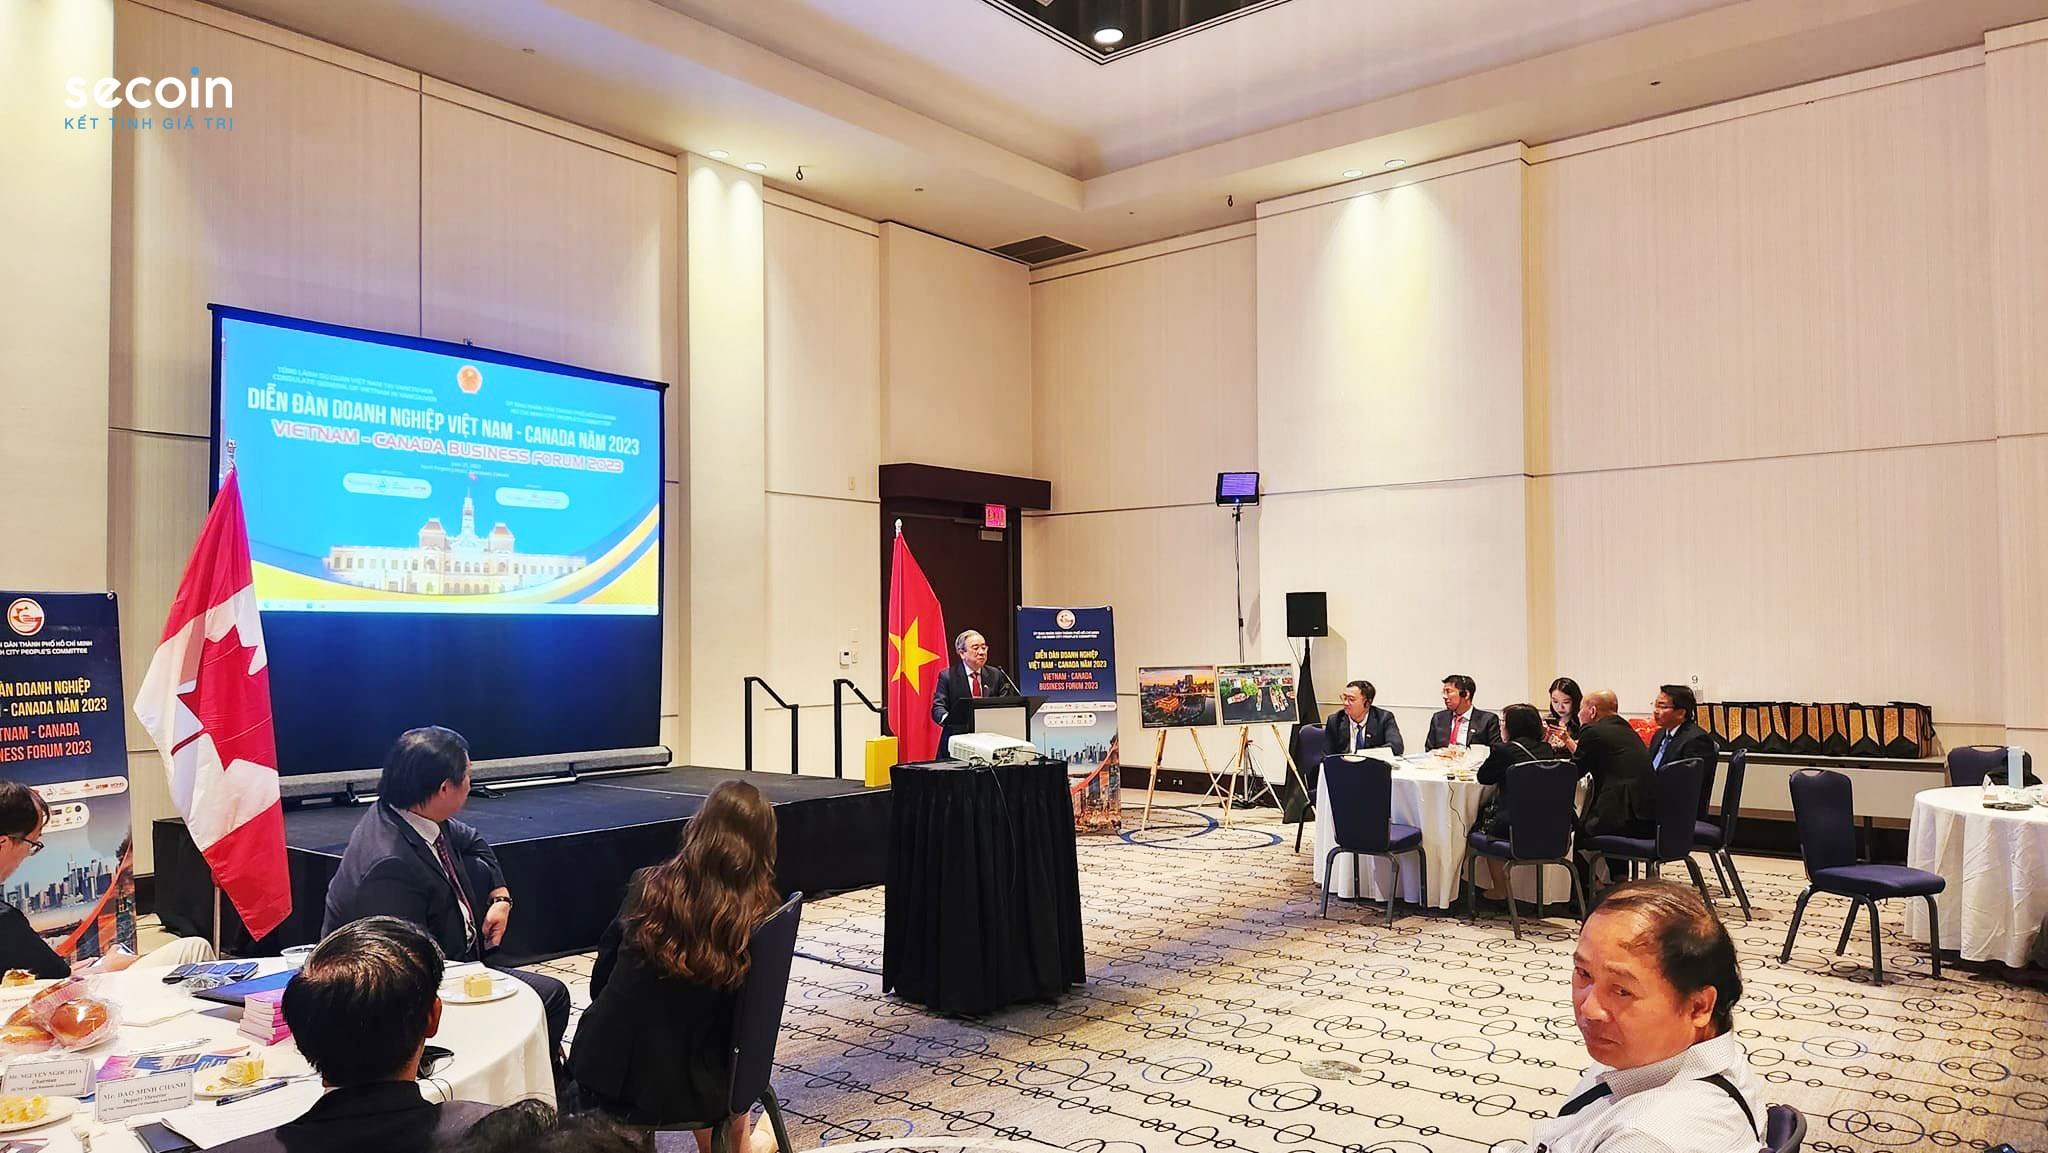 Secoin participates Vietnam enterprise forum – Canada 2023 at Vancouver and Toronto